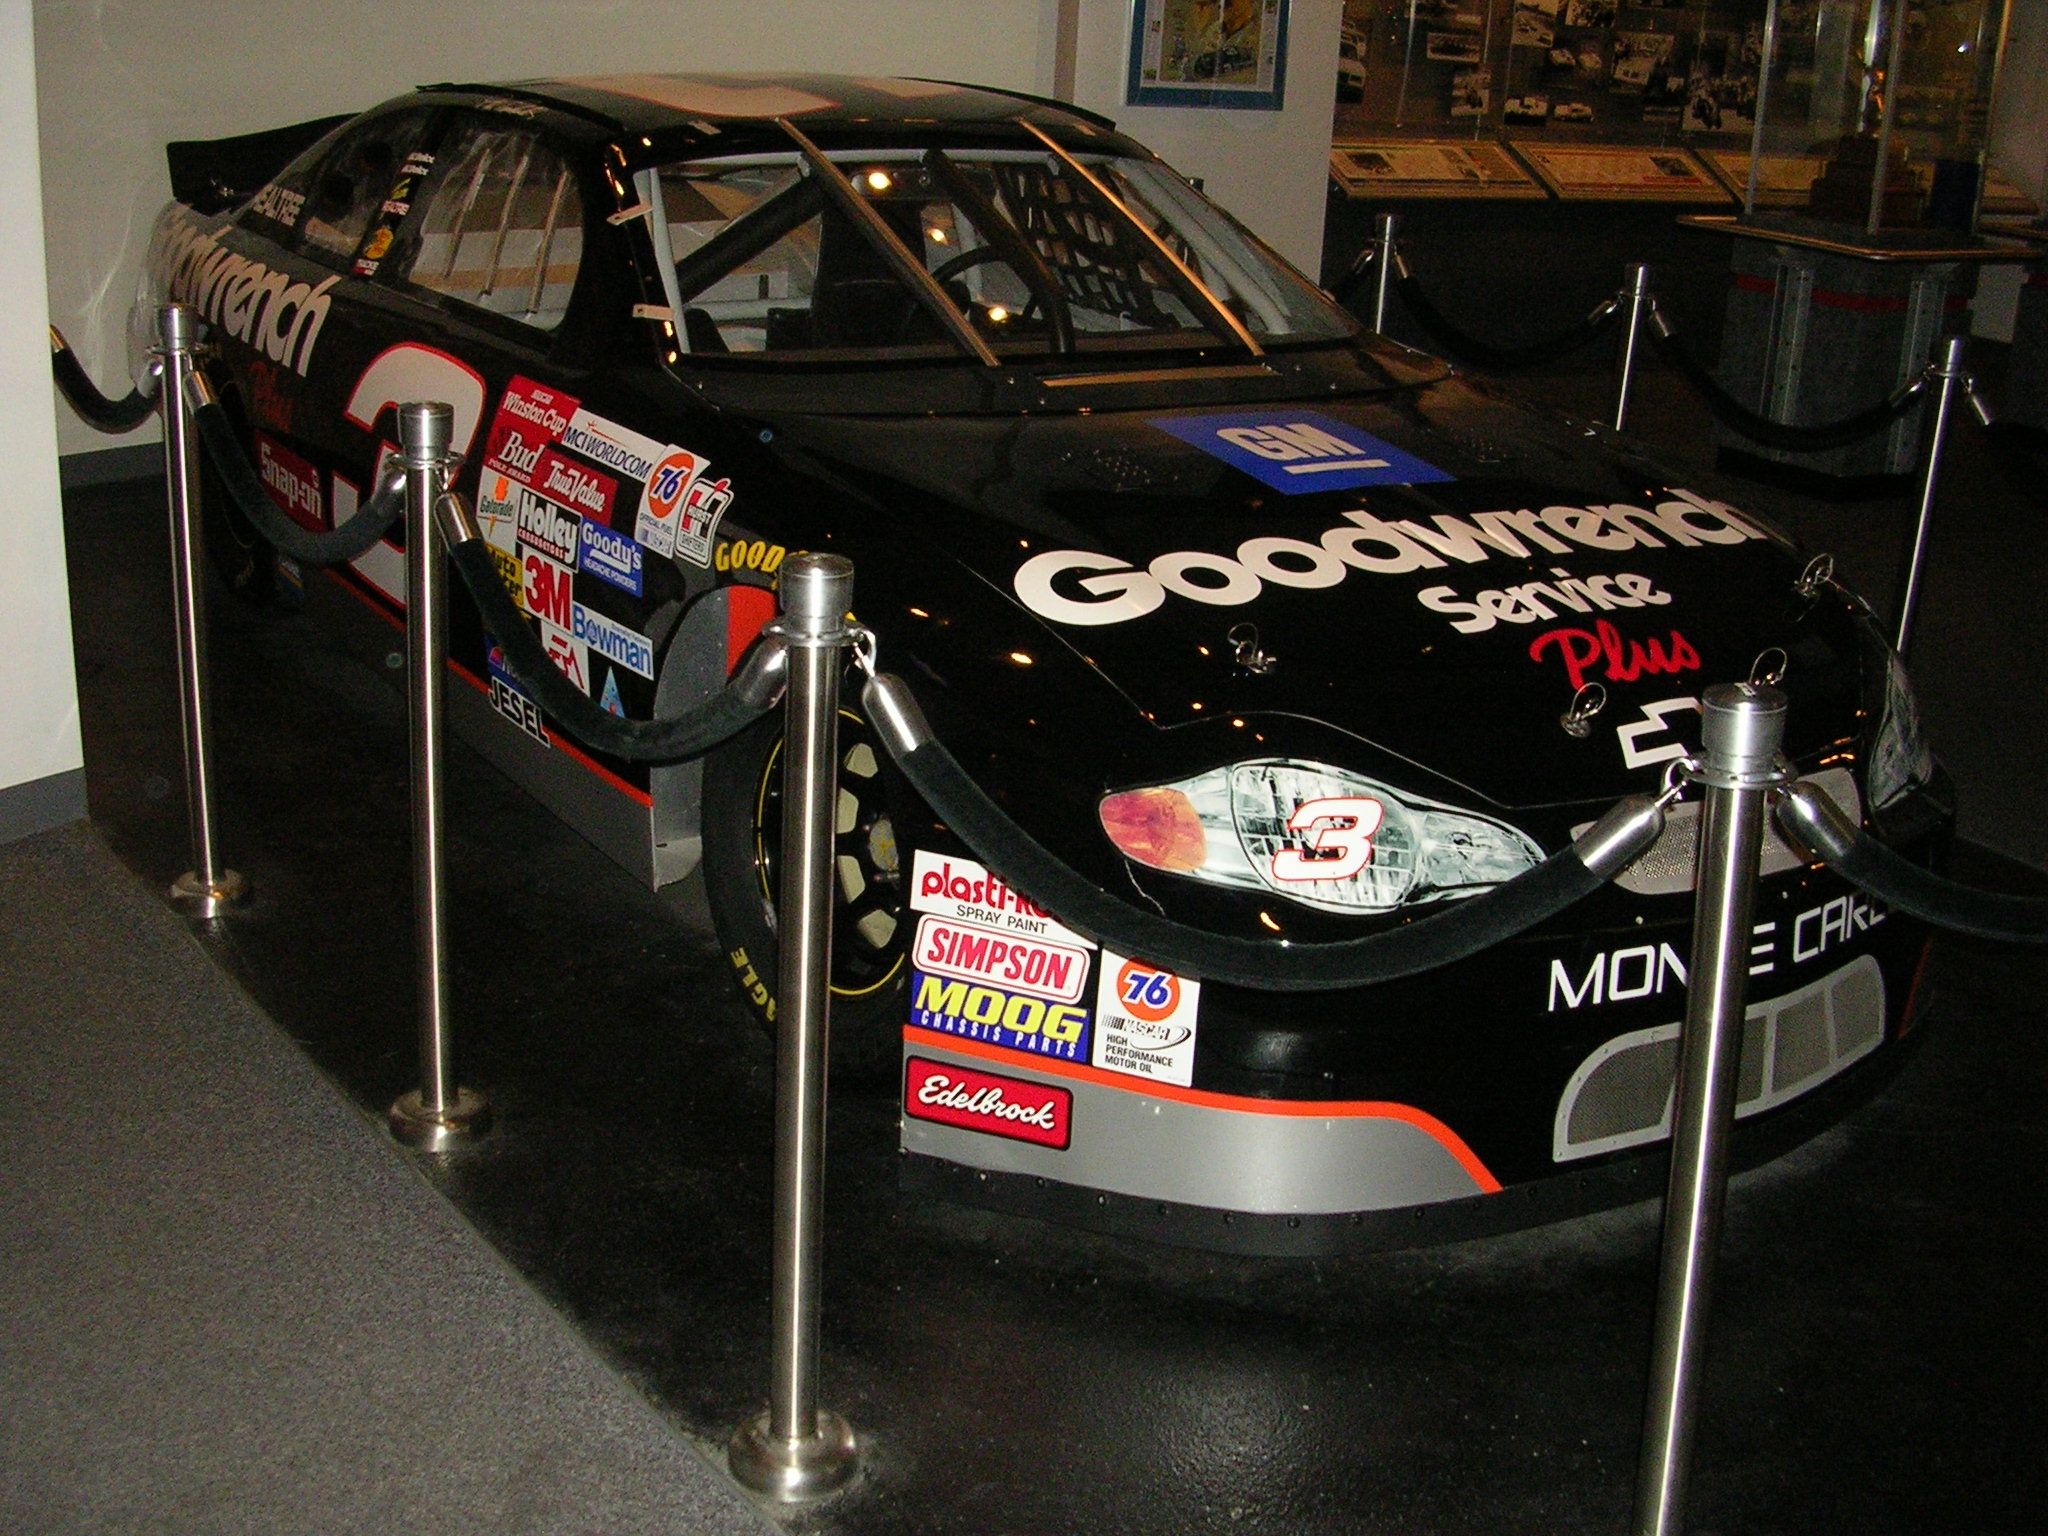 Goodwrench Black - Dale Earnhardt's NASCAR